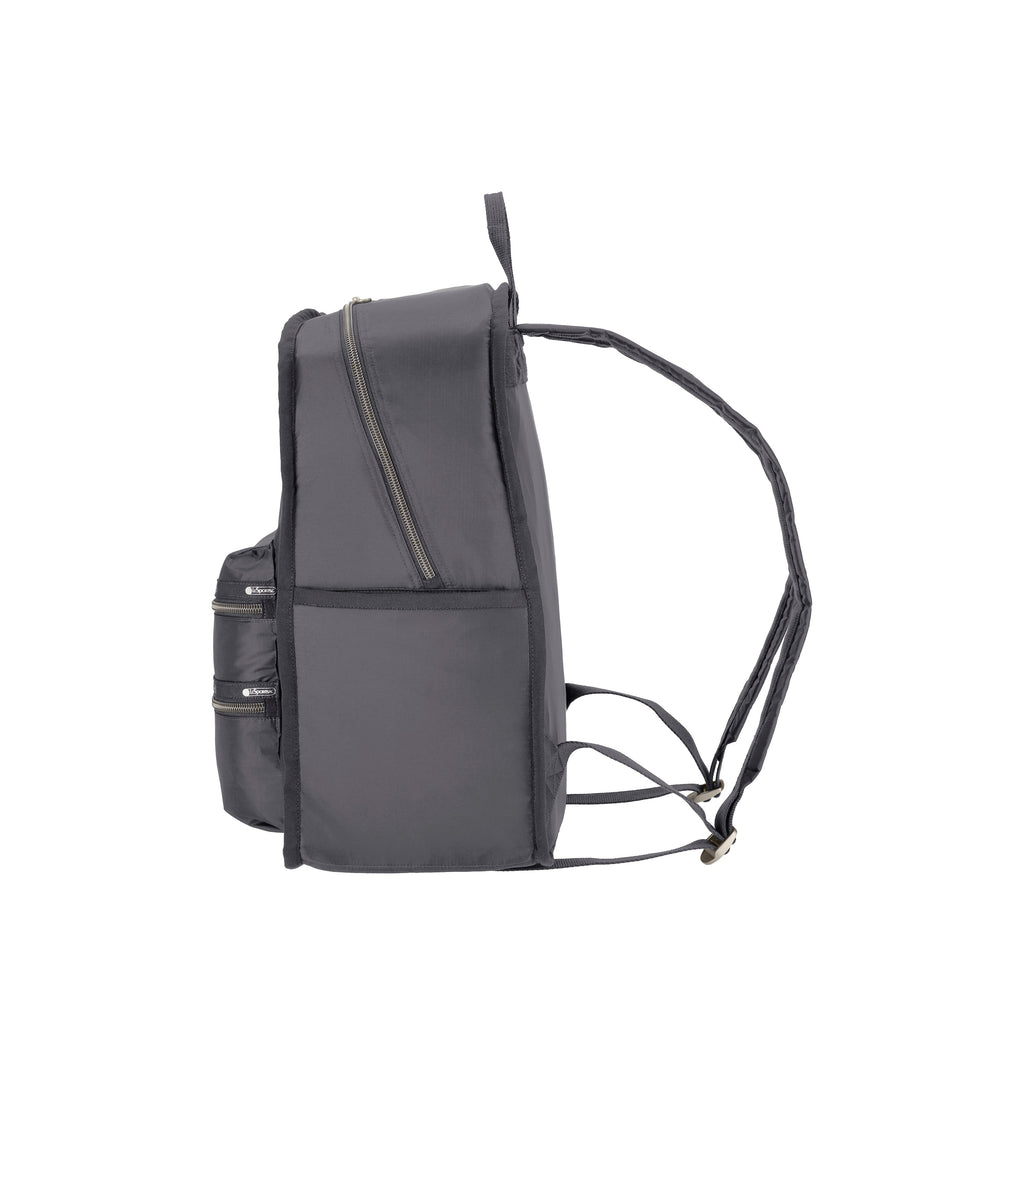 Functional Backpack - 23976612692016